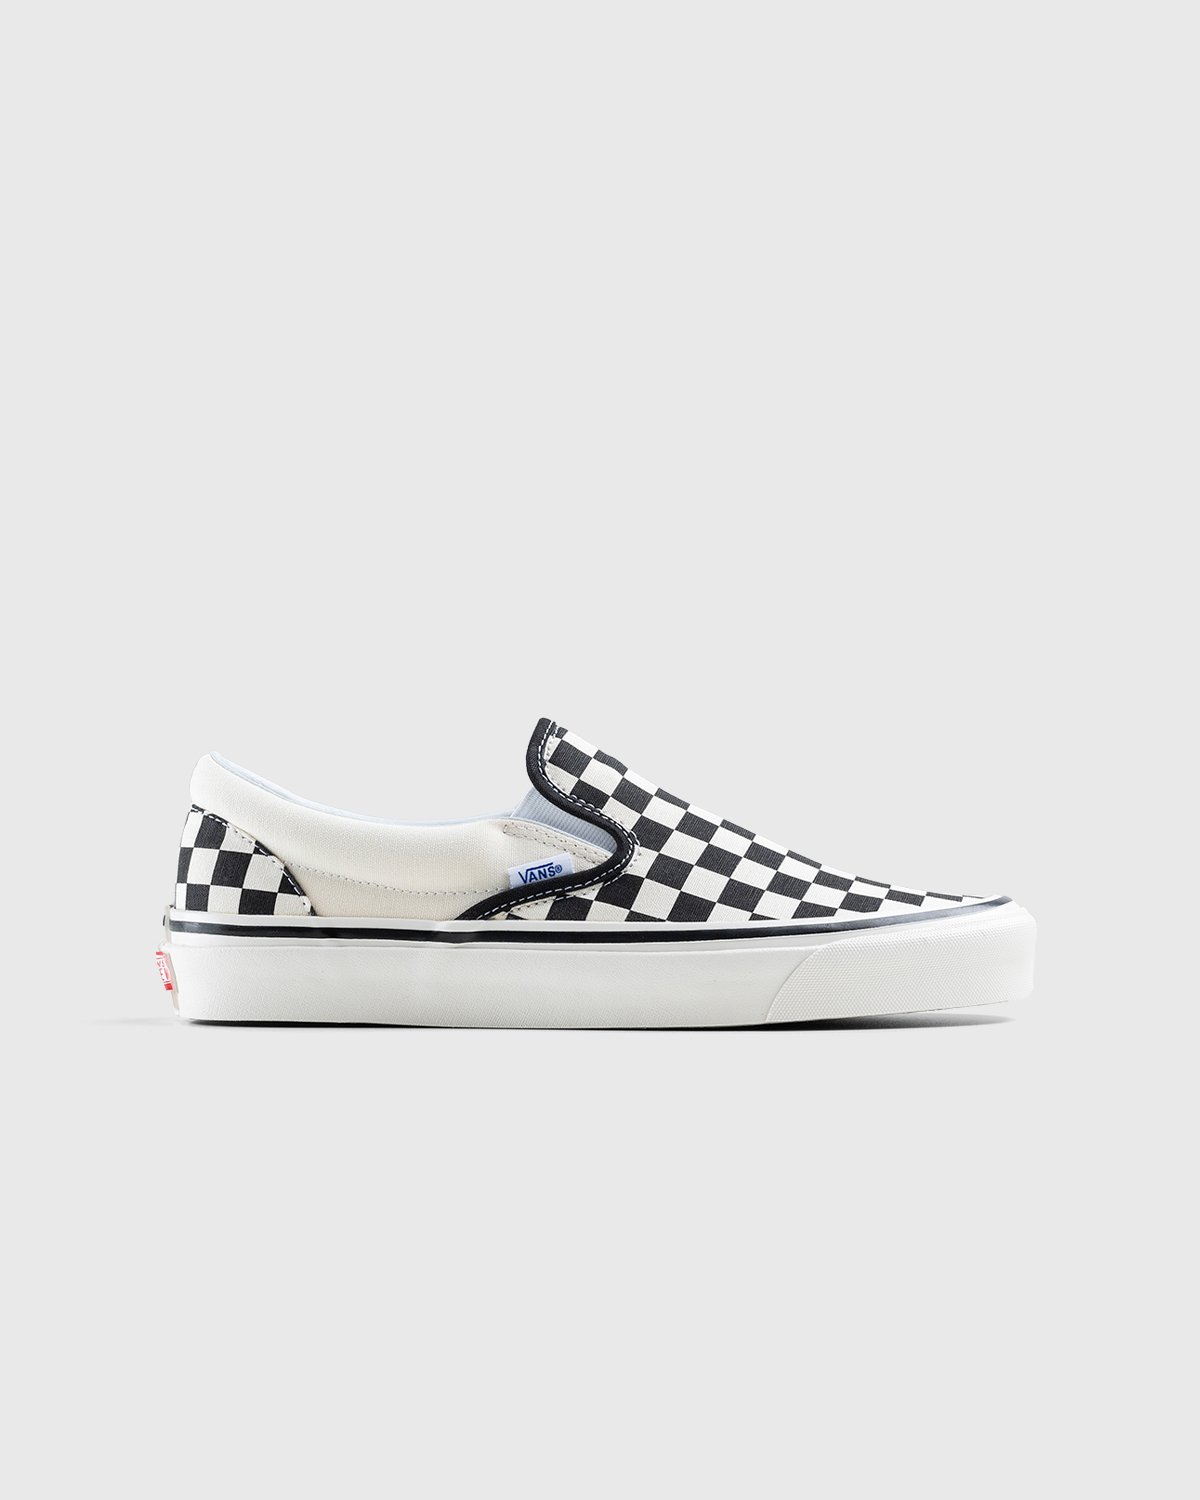 Vans - Anaheim Factory Classic Slip-On 98 DX Checkerboard - Footwear - White - Image 1